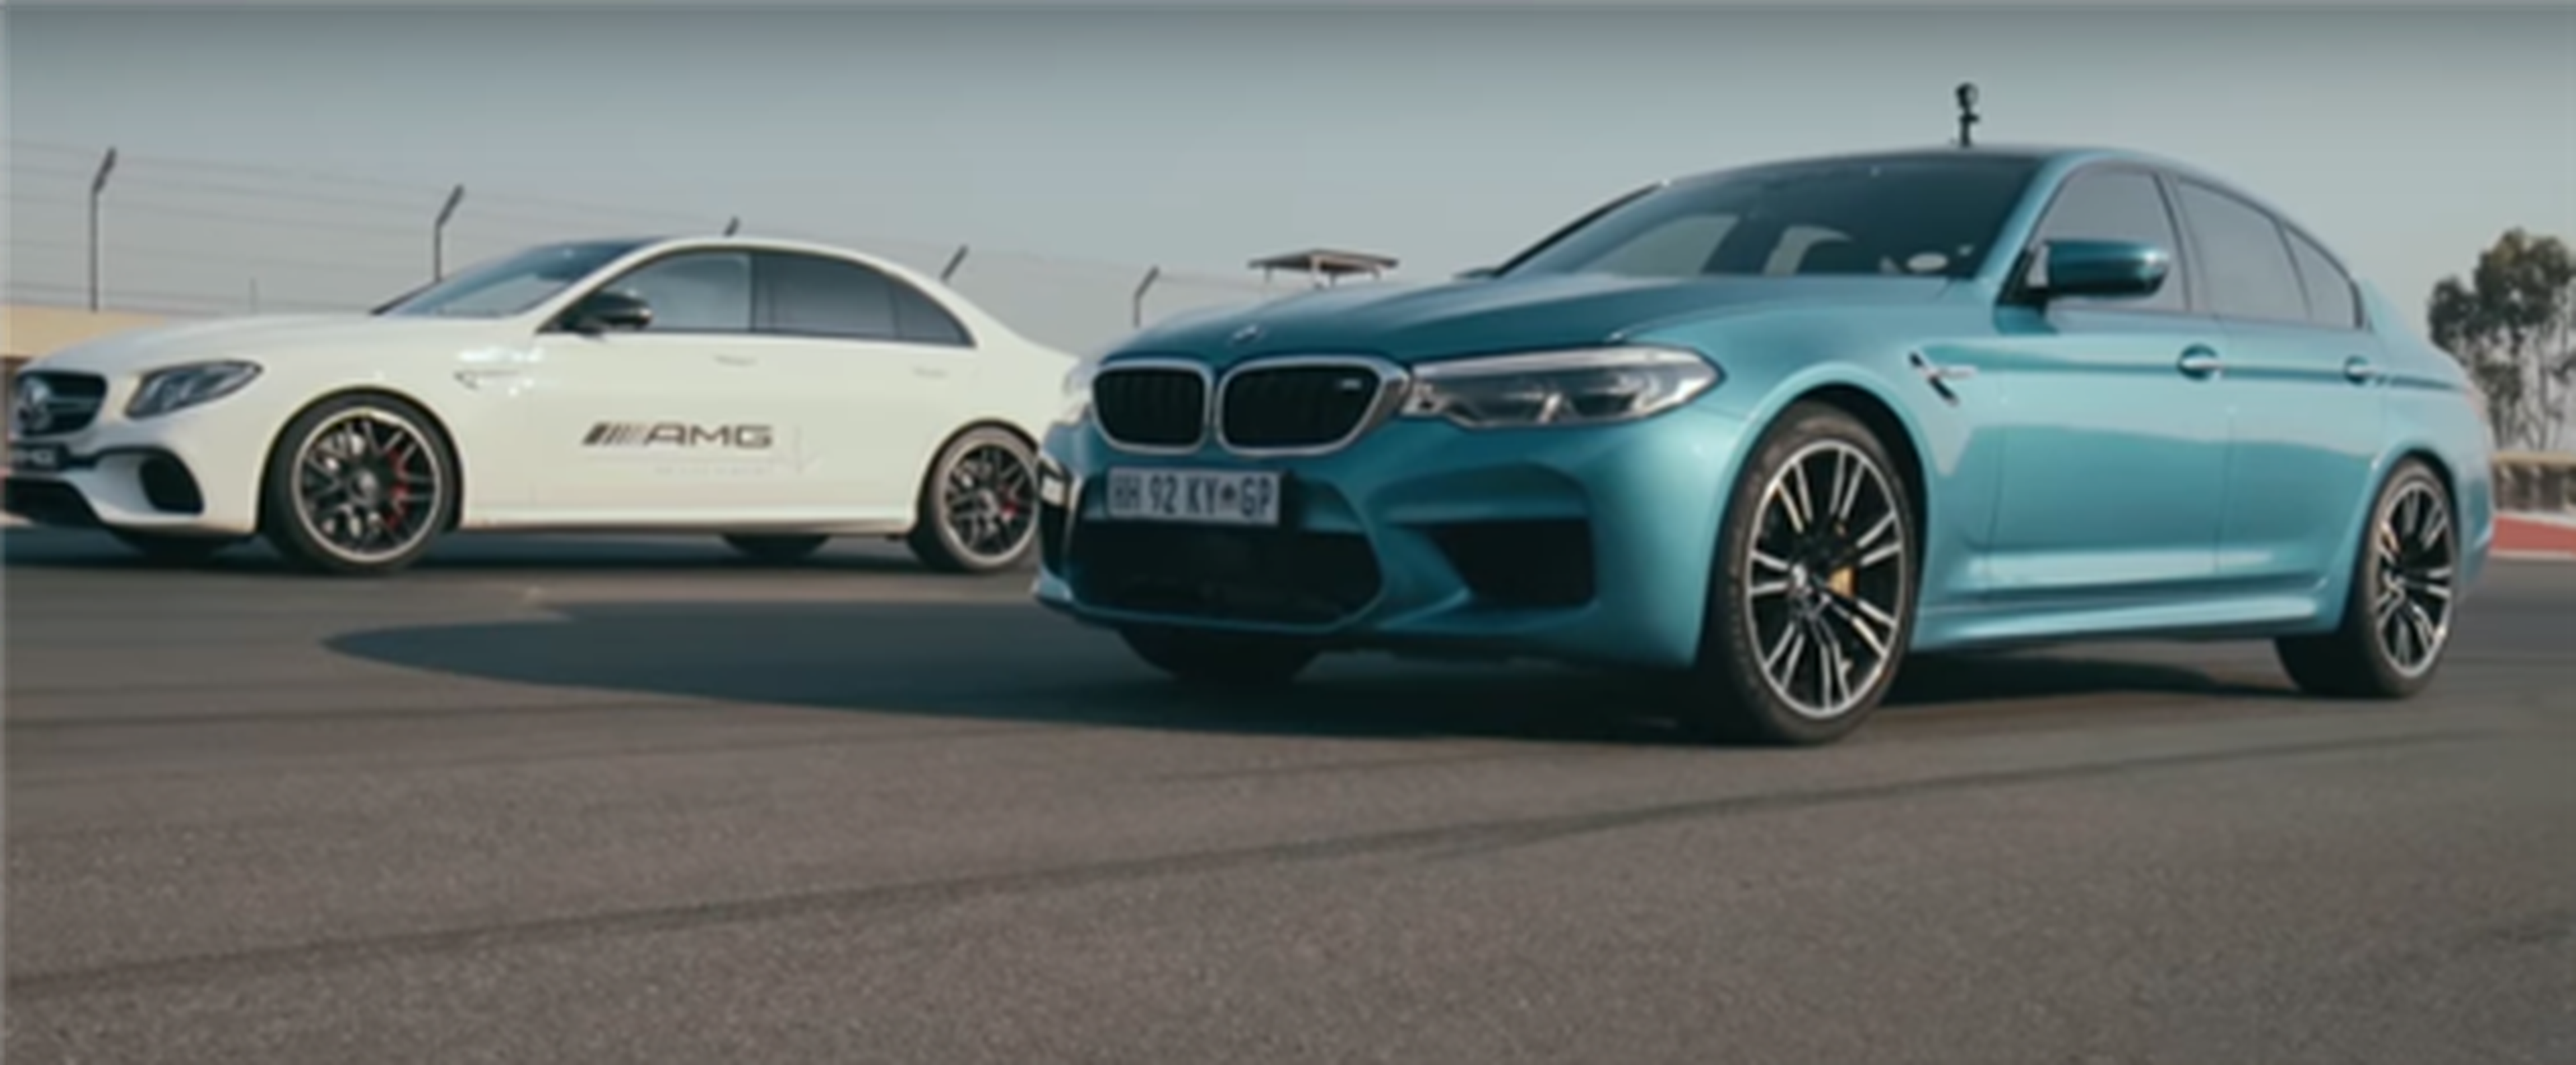 VÍDEO: Nuevo BMW M5 vs. Mercedes-AMG E63 S